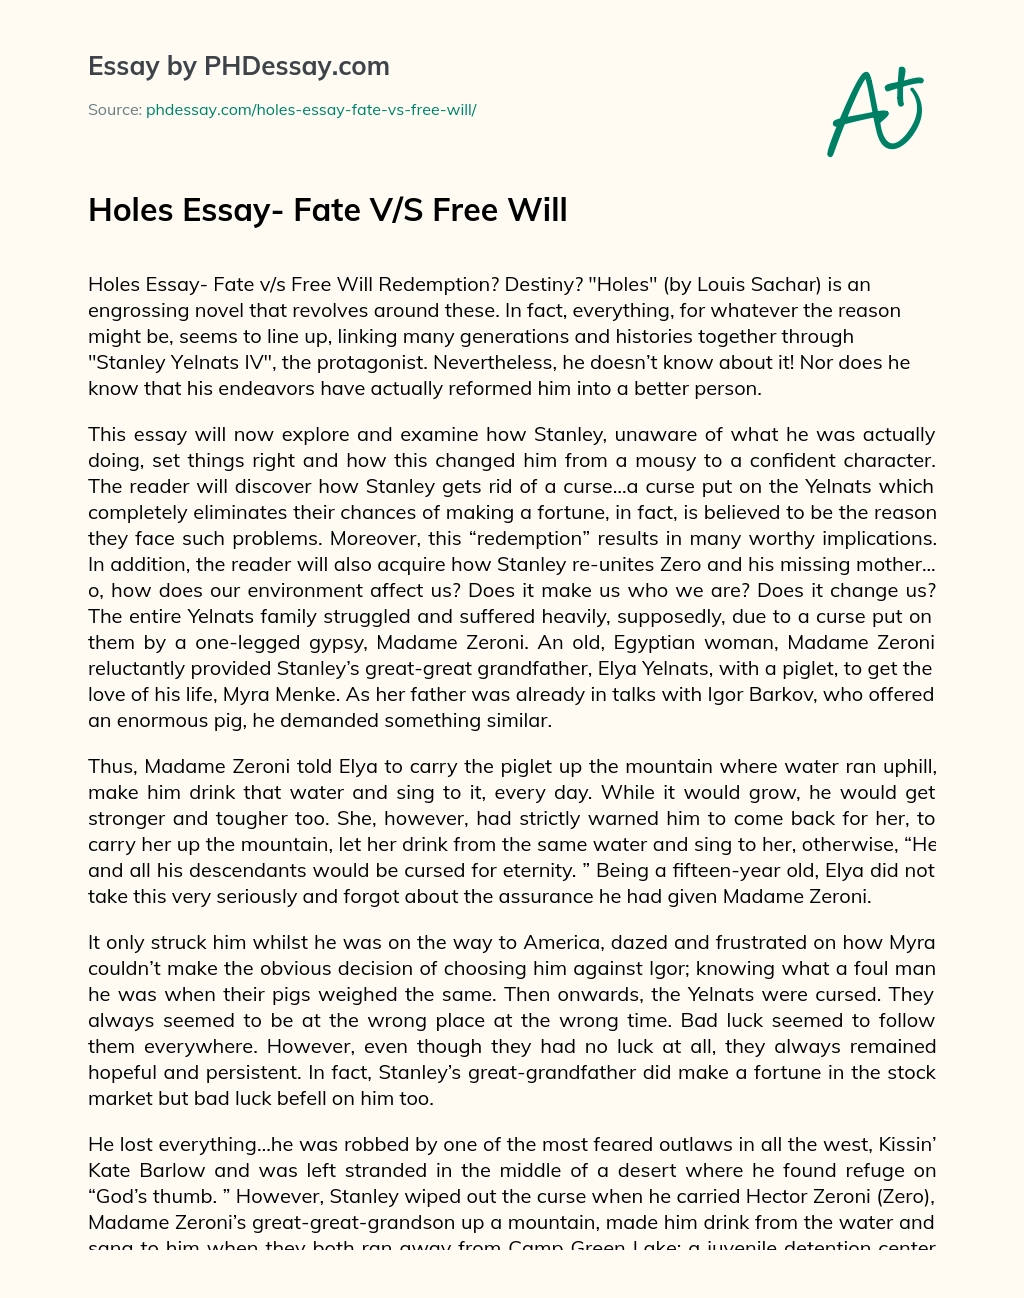 Holes Essay- Fate V/S Free Will essay